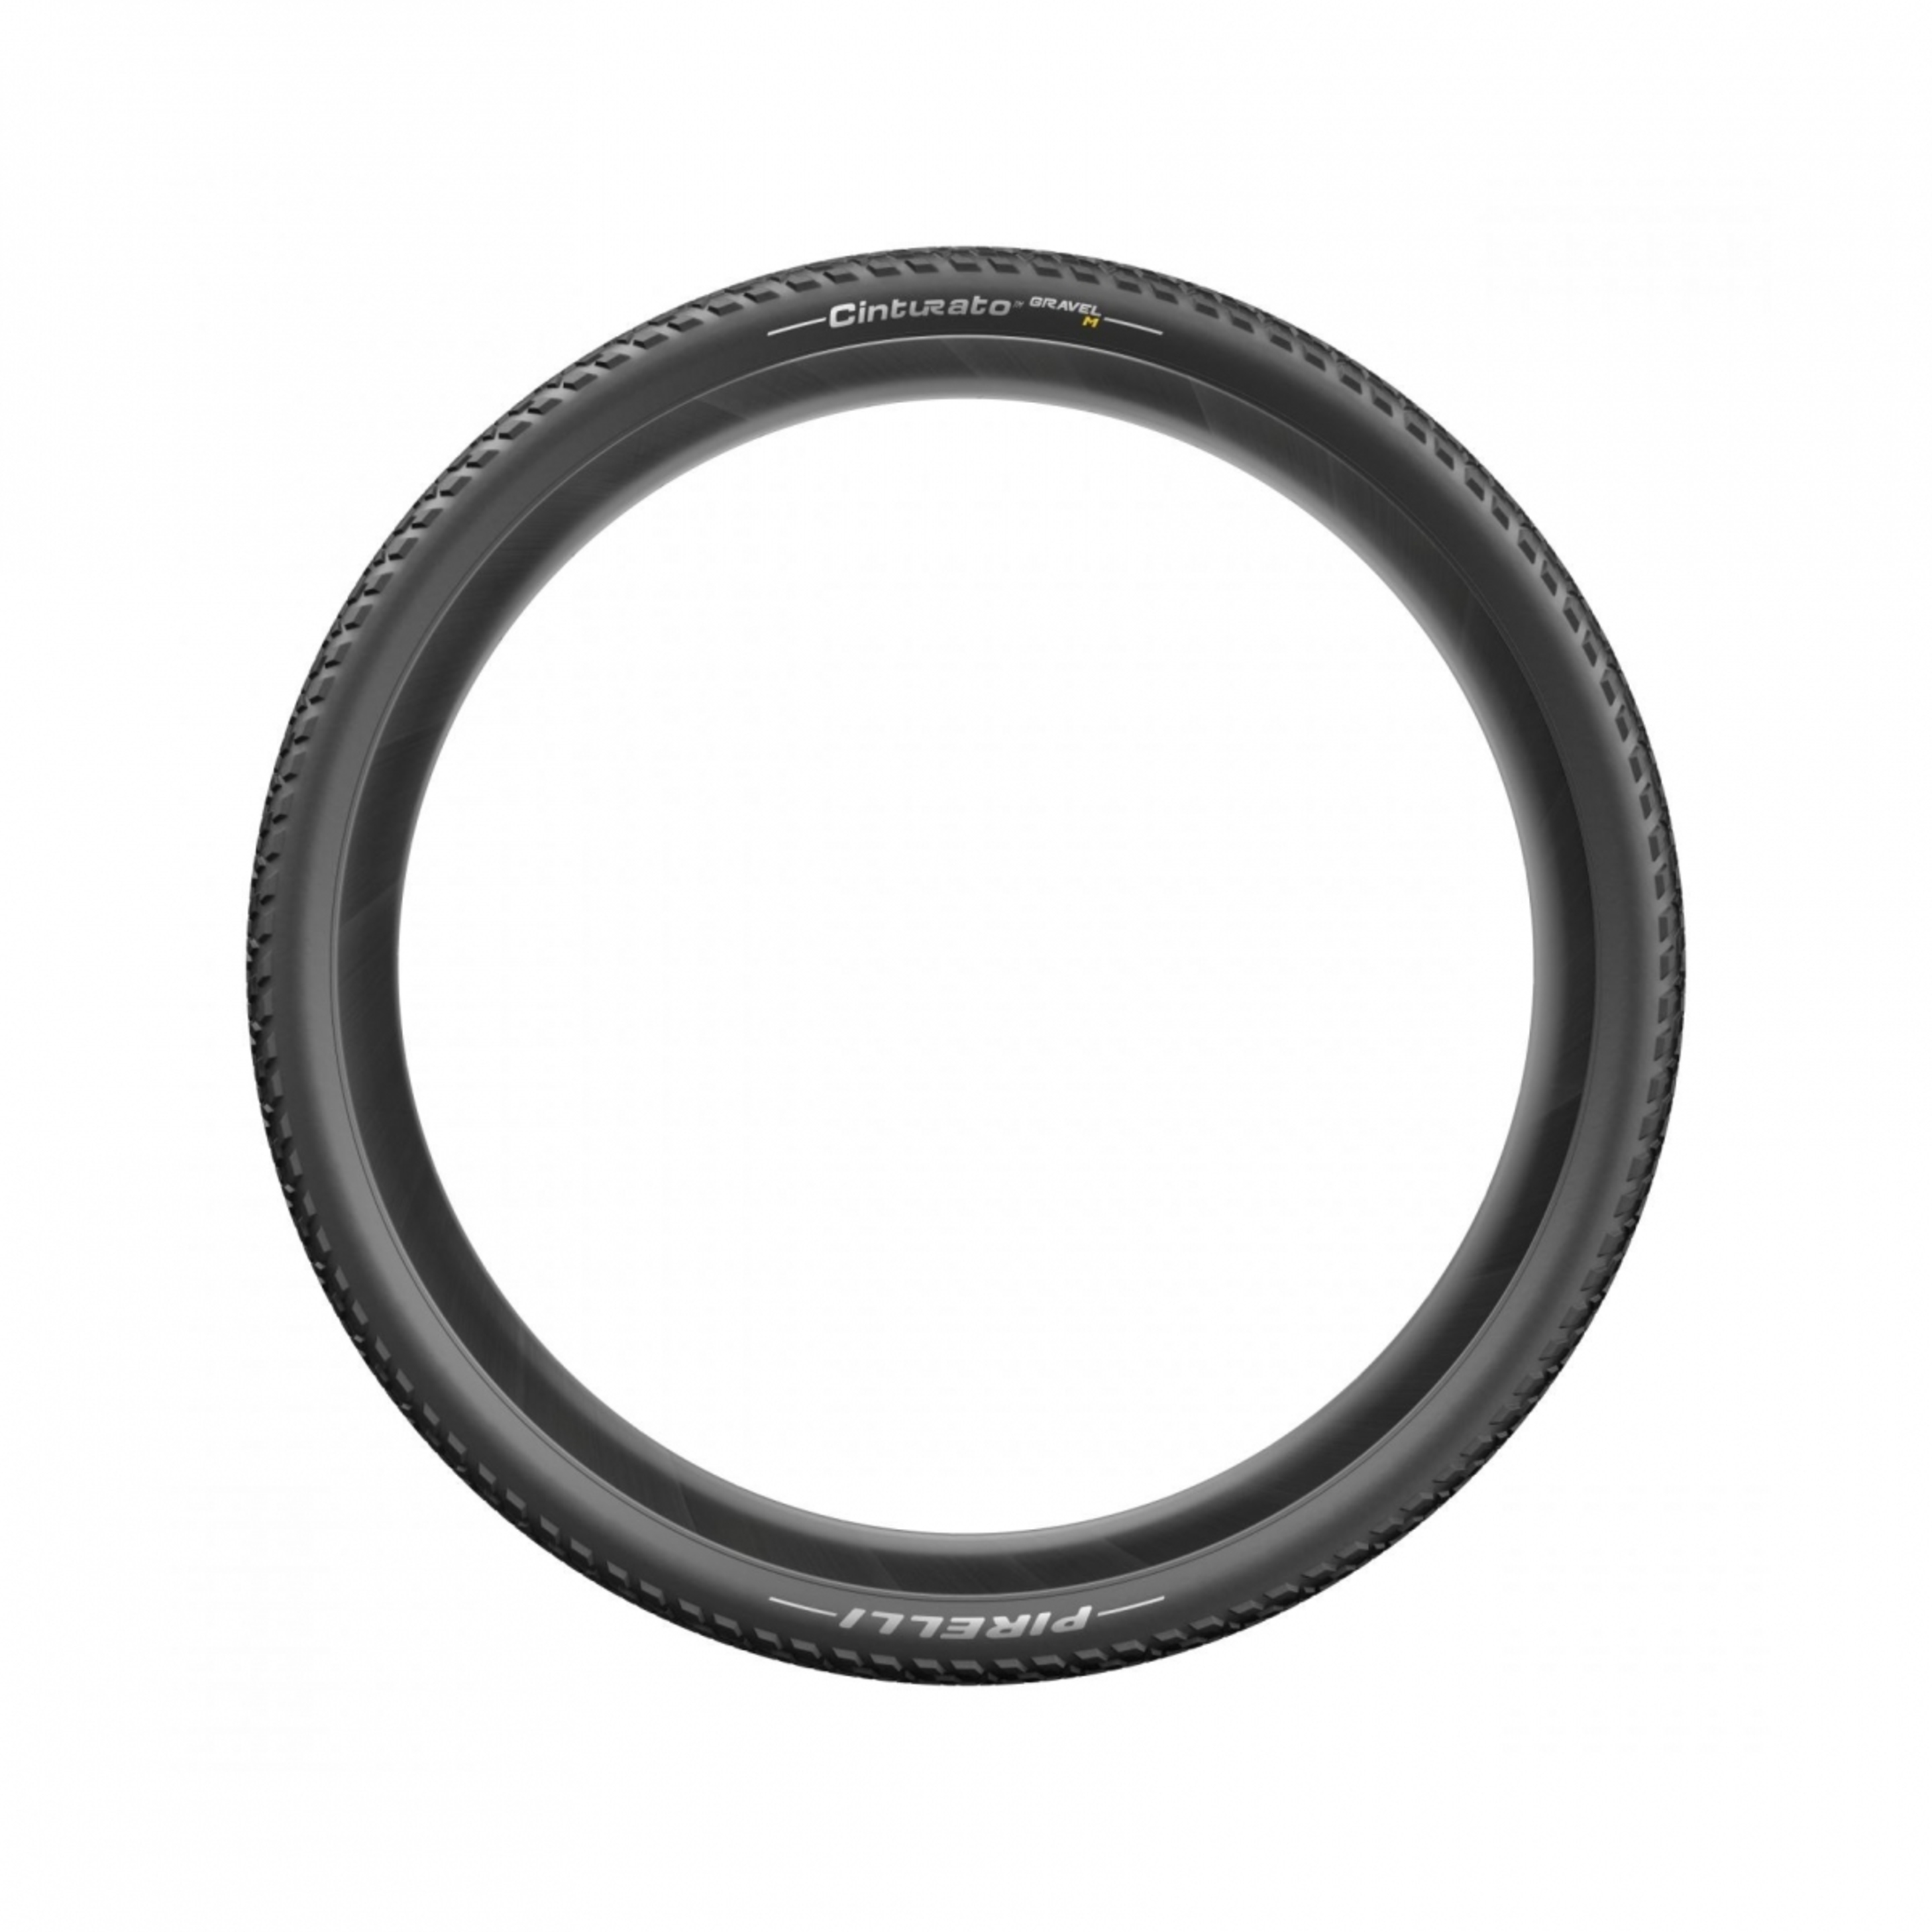 Neumático Pirelli Cinturato Gravel Mixto Tlr 700x45 - negro  MKP